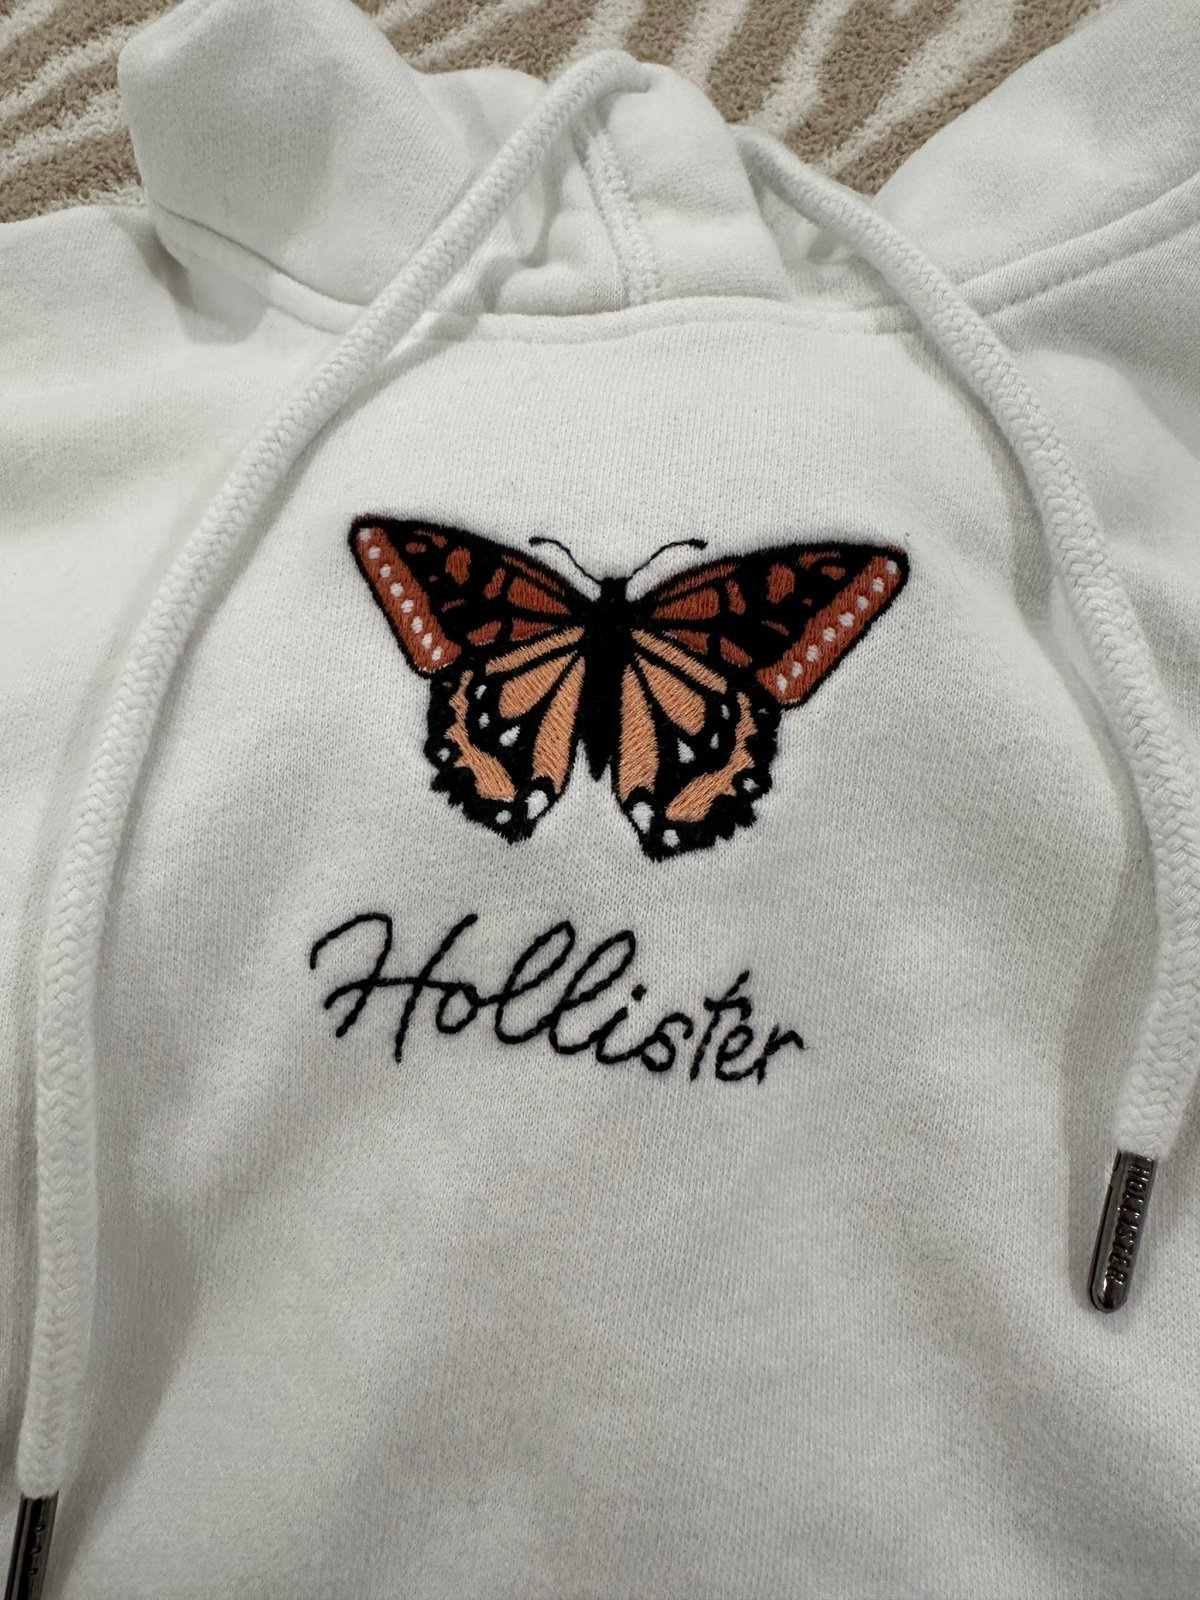 Custom hollister hoodie fLcHFXNSa all for you